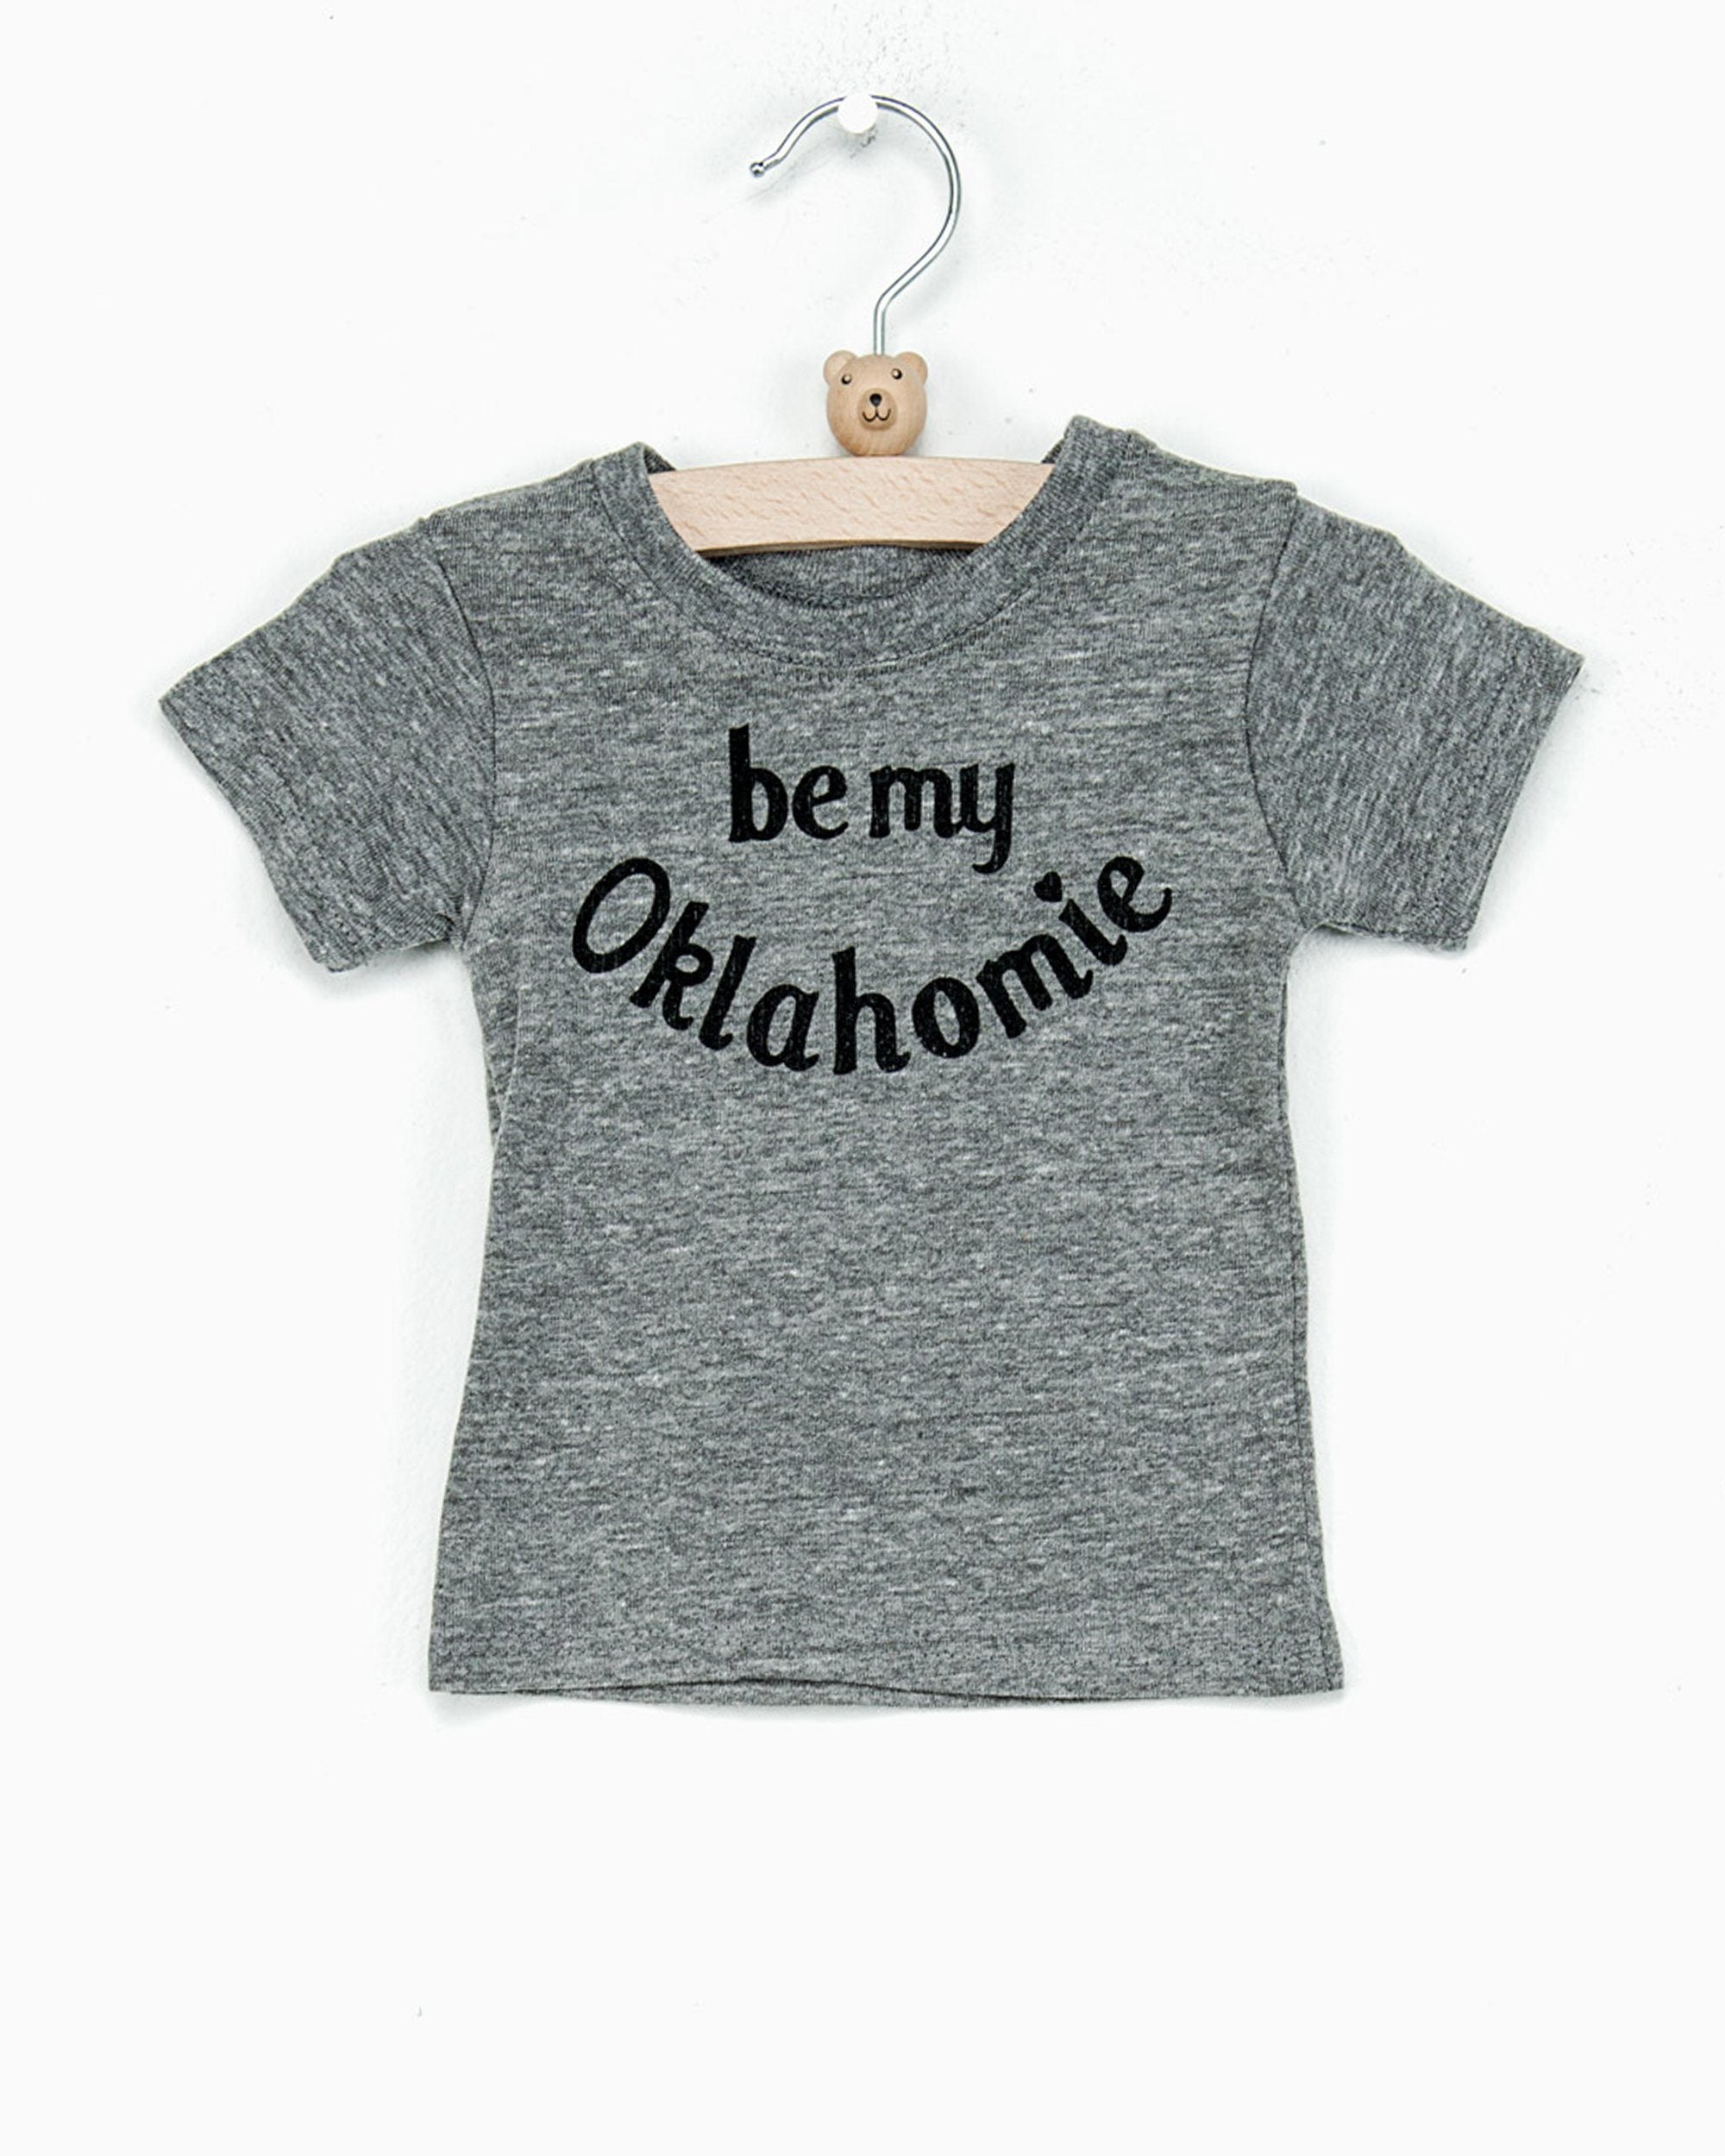 Children's Be My Oklahomie (Black Letters) Gray Tri-Blend Tee (781223329895)